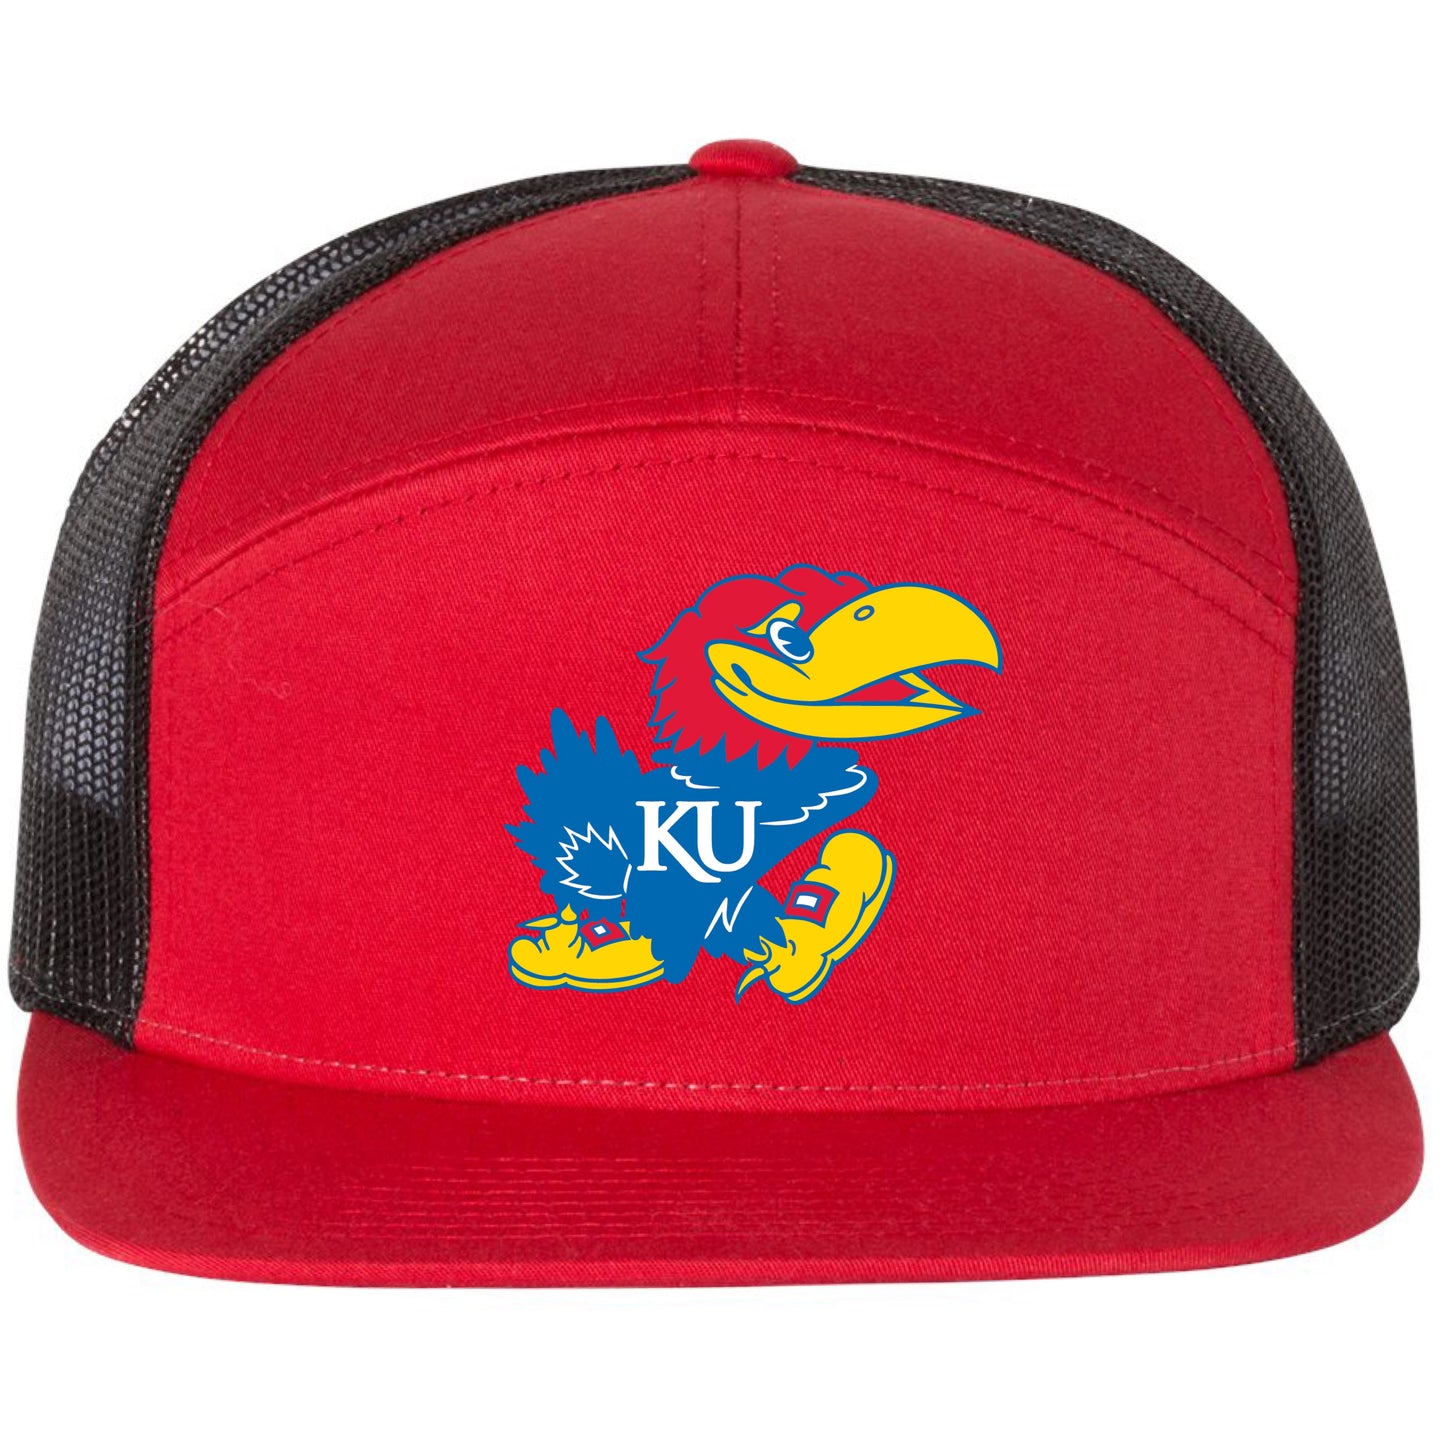 Kansas Jayhawks 3D Snapback Seven-Panel Trucker Hat- Red/ Black - Ten Gallon Hat Co.